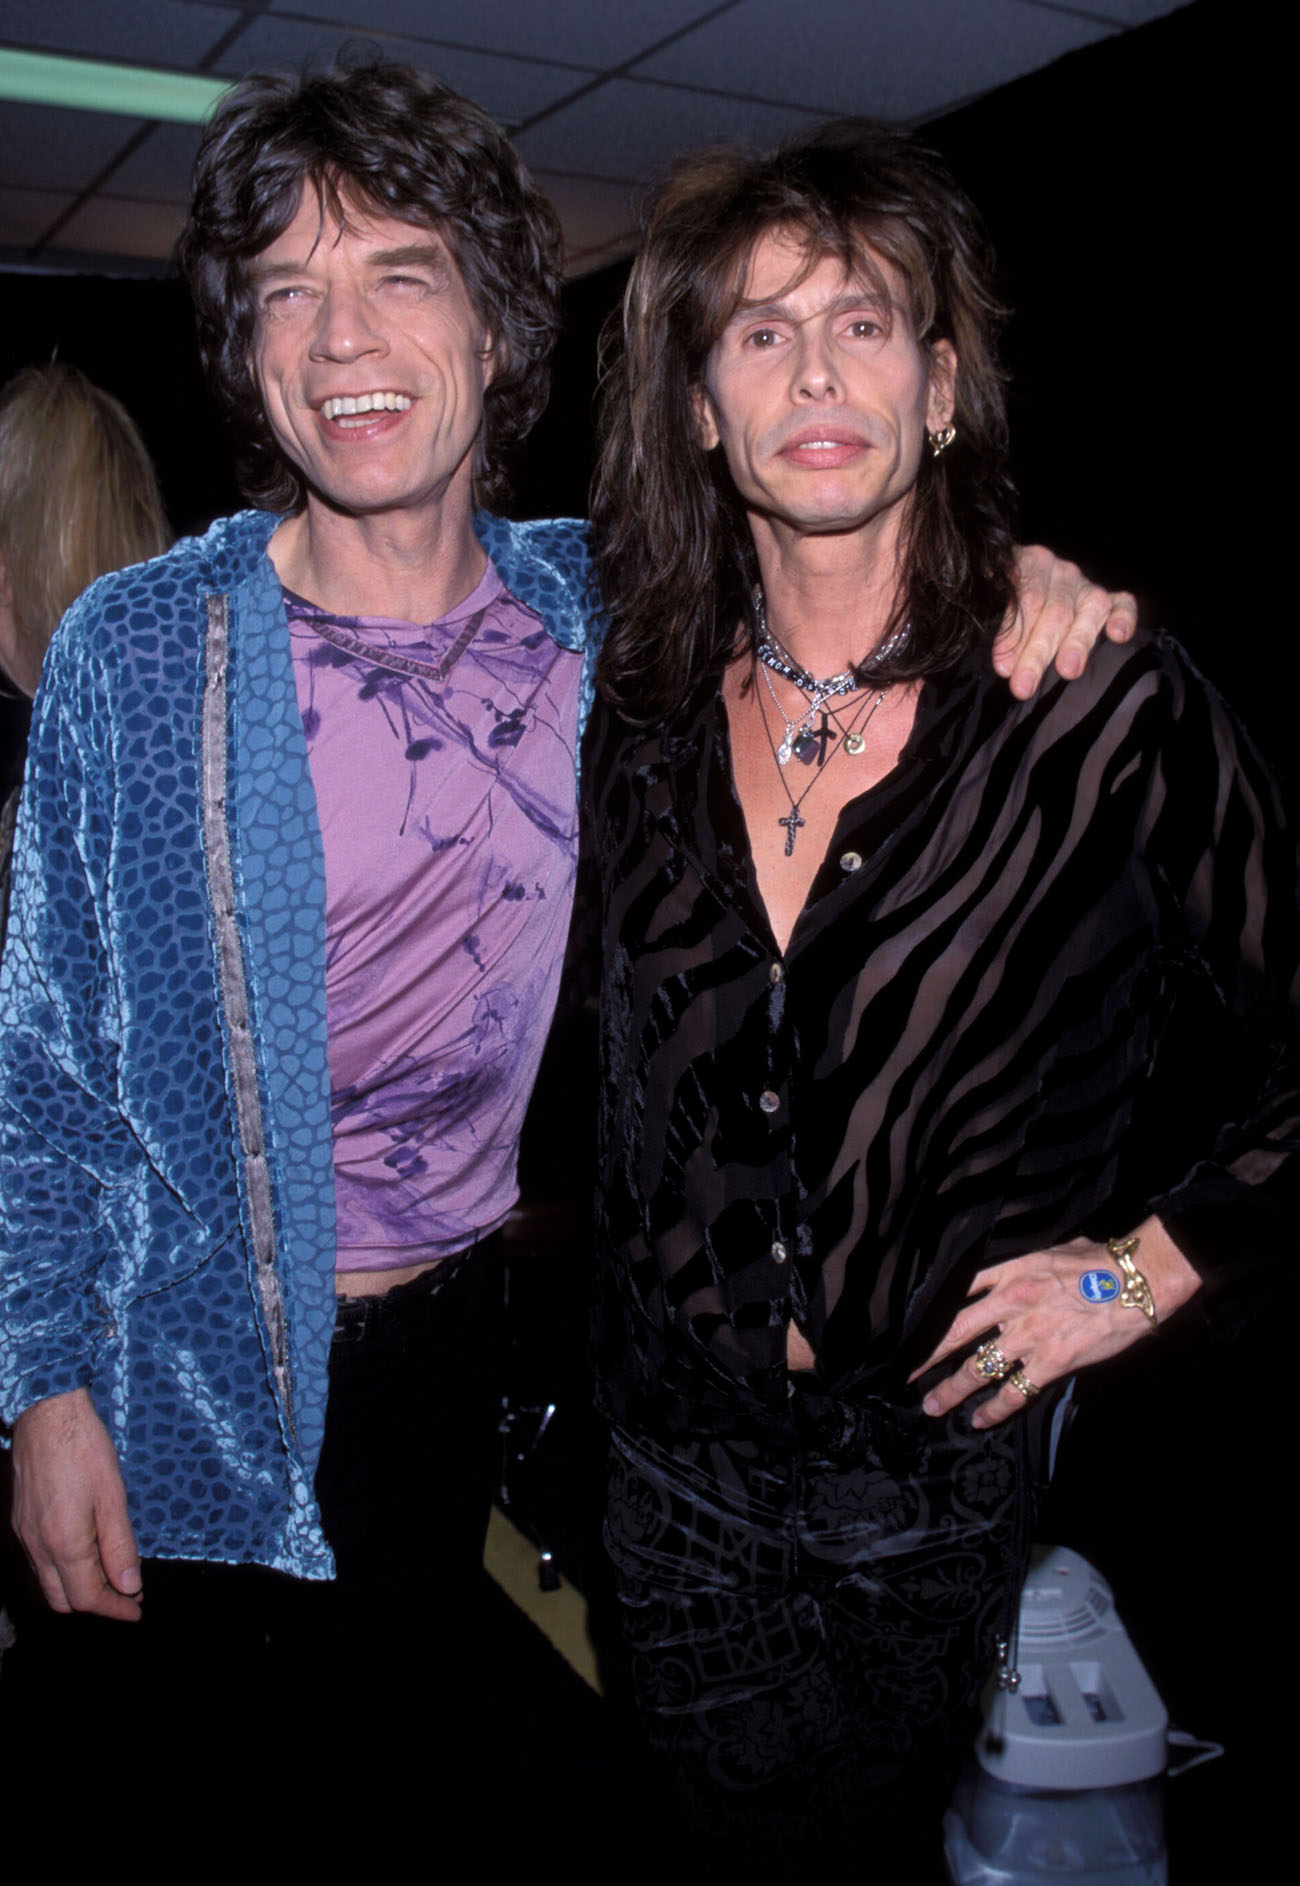 Mick Jagger wearing purple and blue embracing Steven Tyler wearing black in 1997.